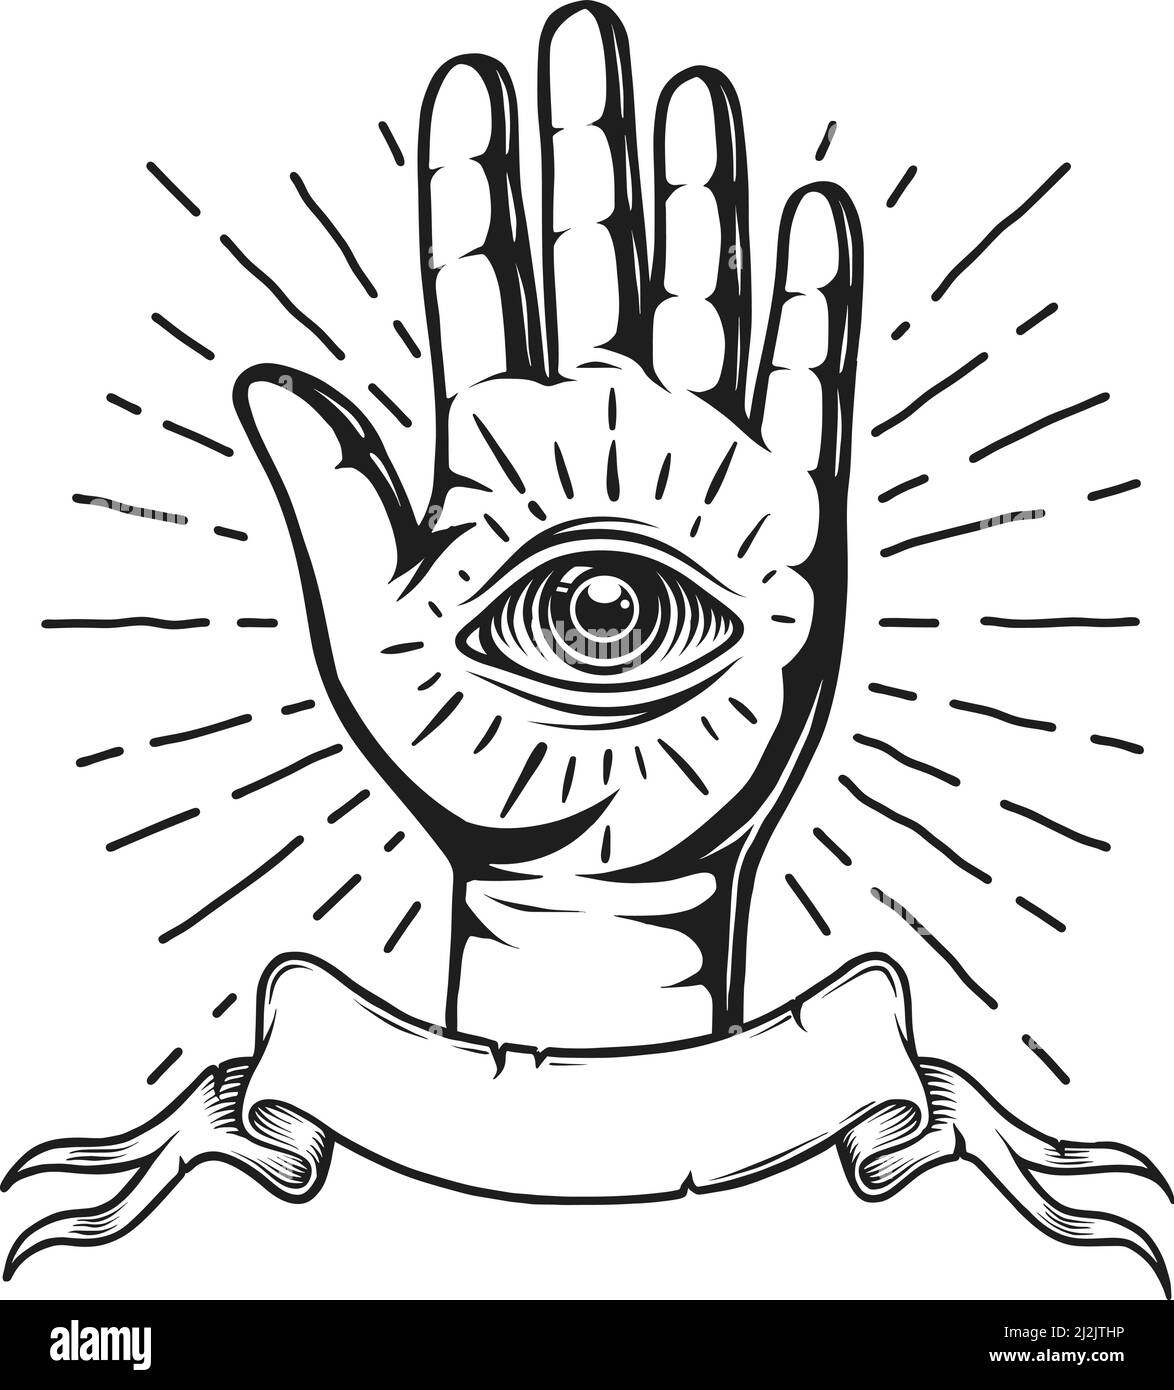 Vintage monochrome tattoo emblem with human eye on hand ribbon and sunburst isolated vector illustration Stock Vector